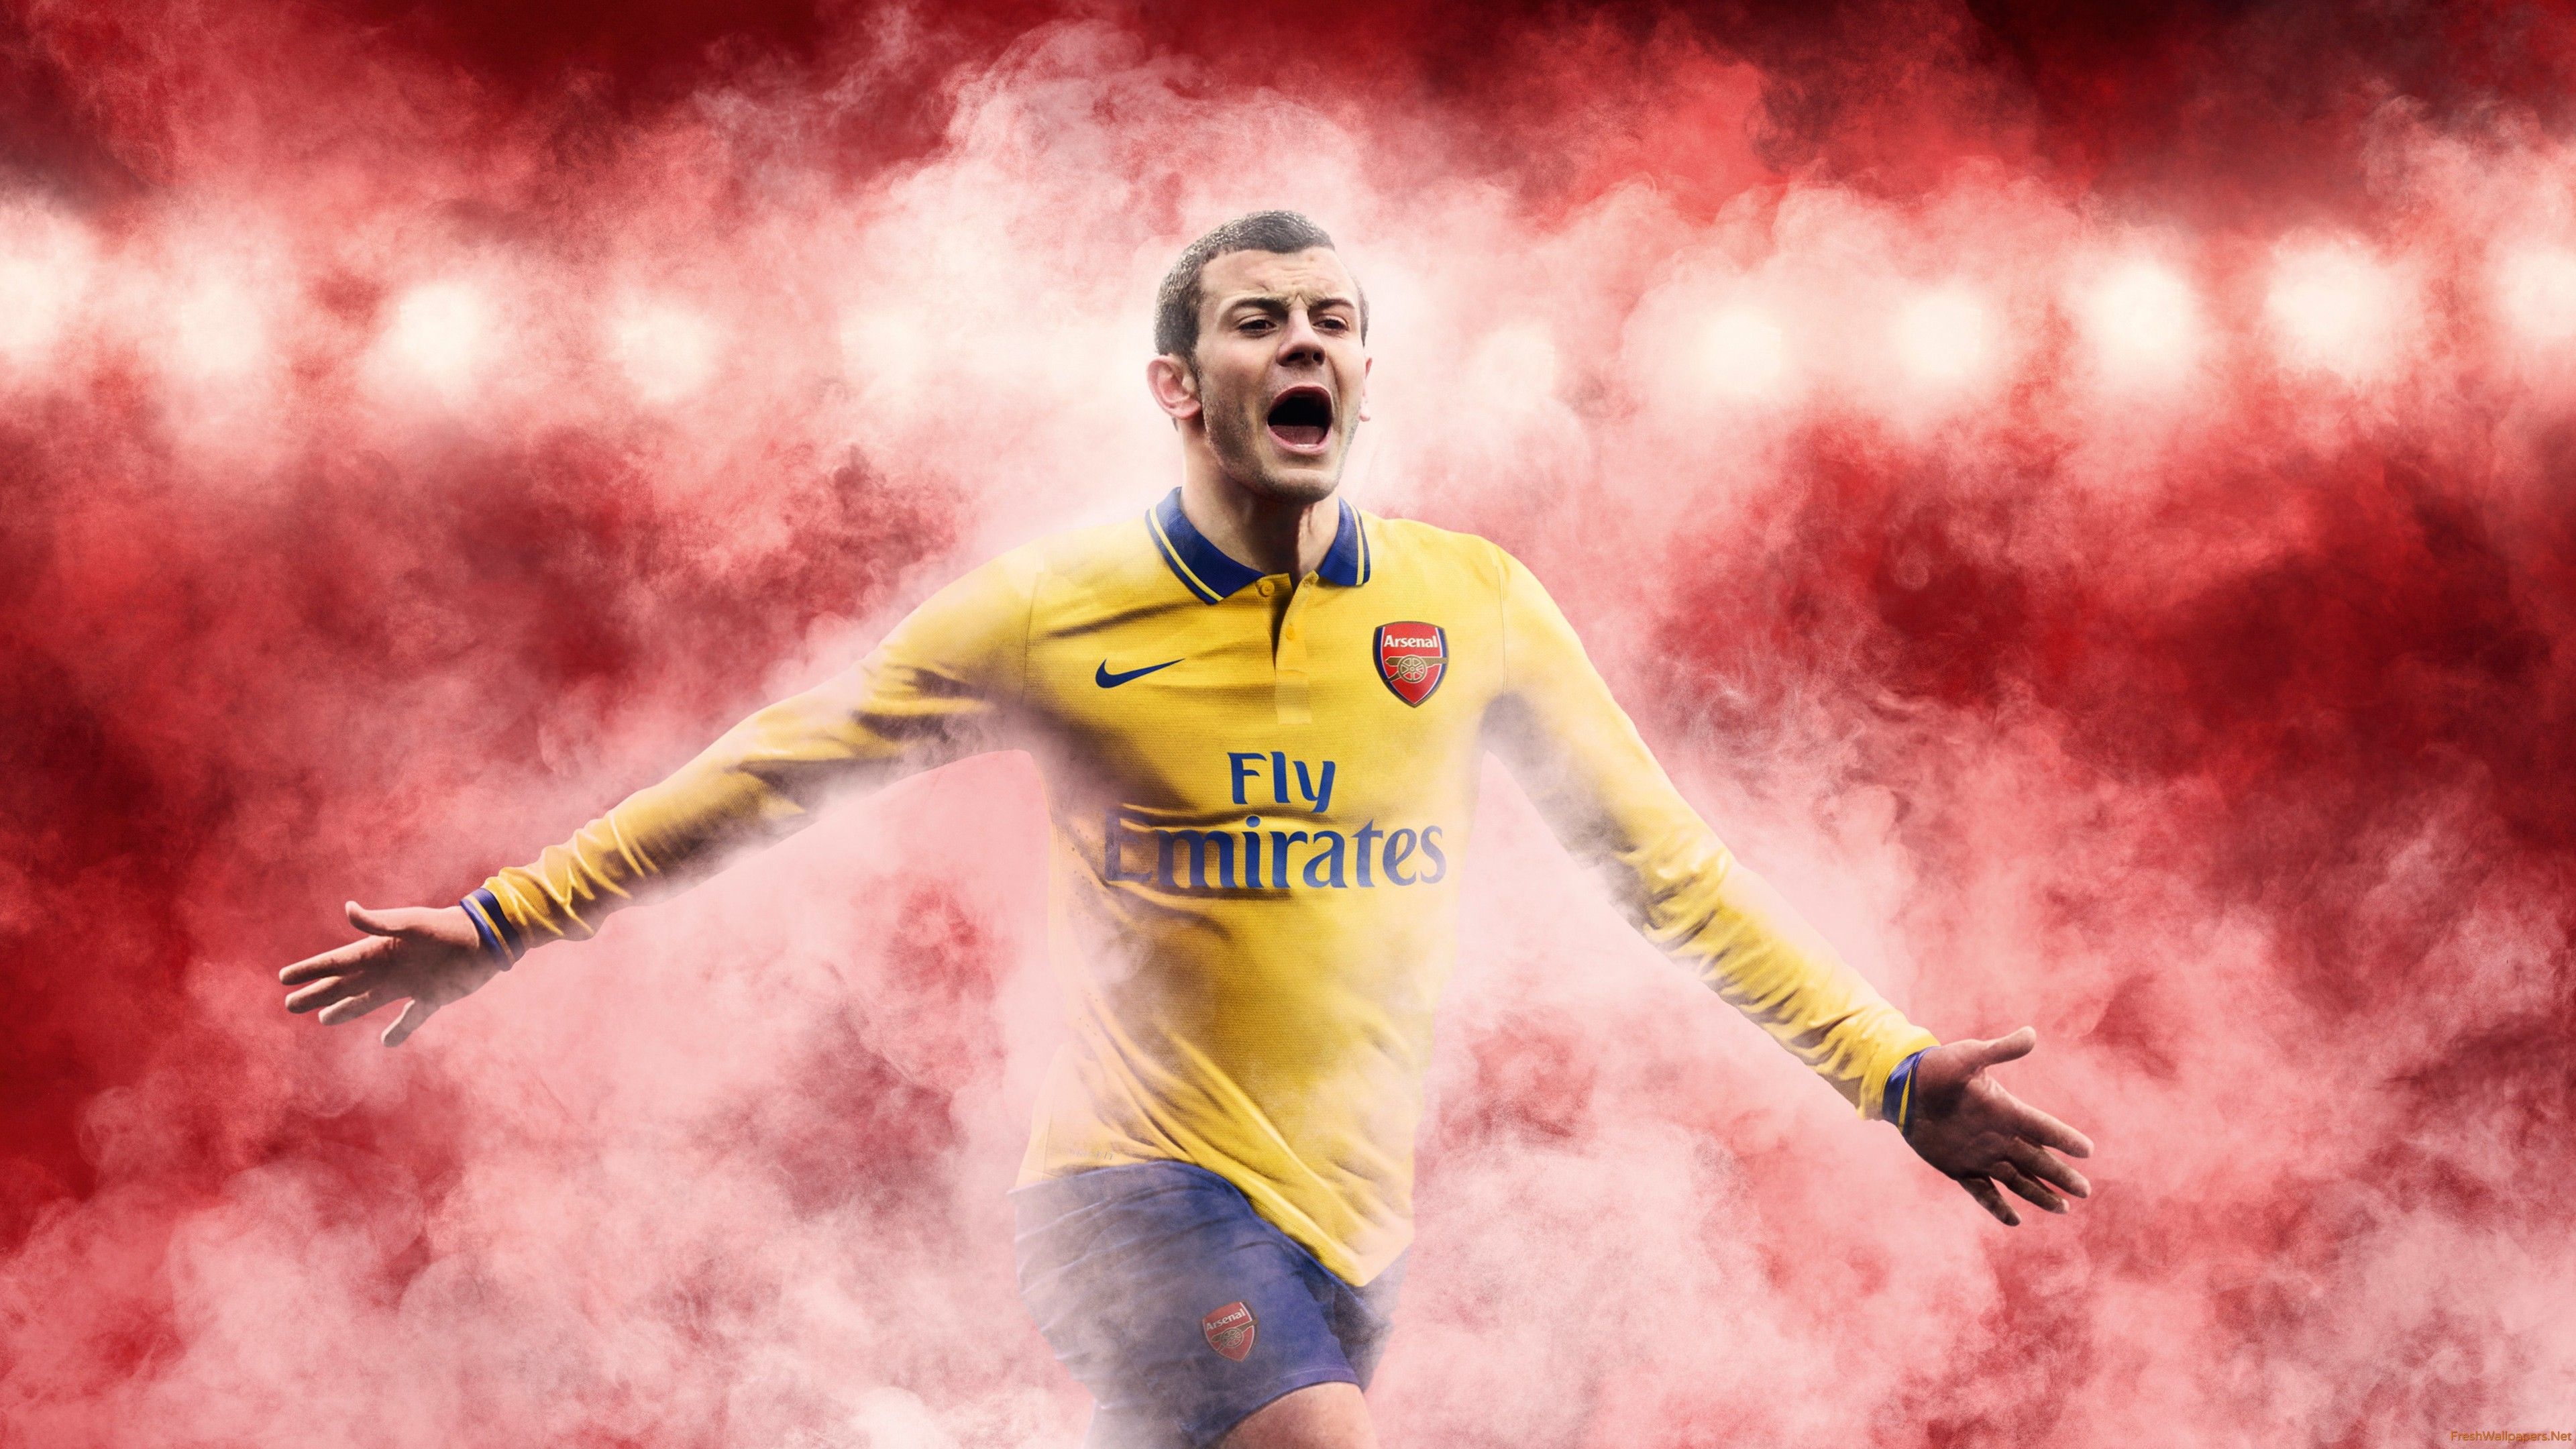 Arsenal 4K wallpaper